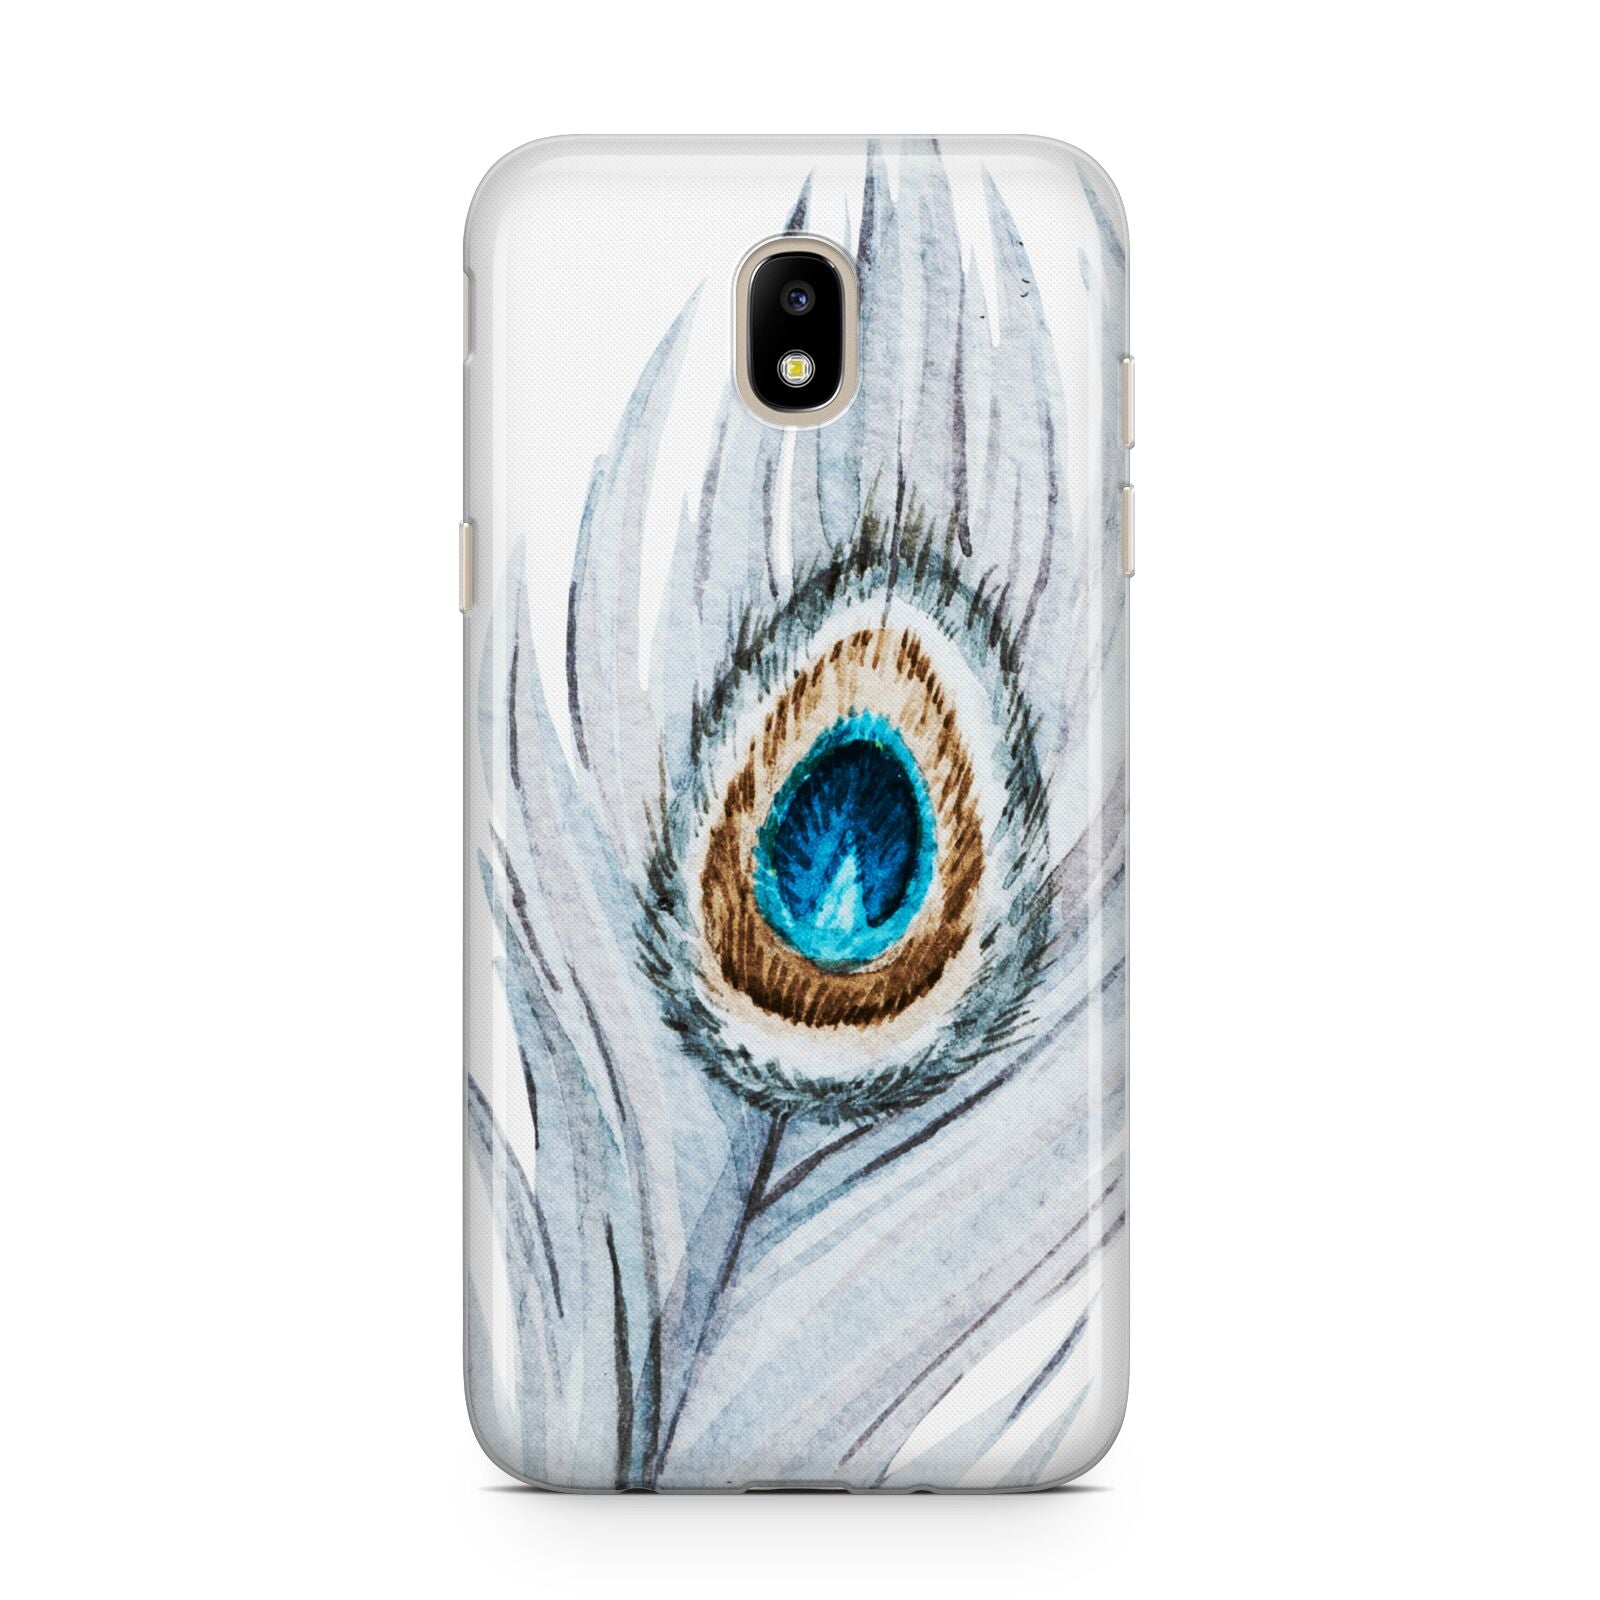 Peacock Samsung J5 2017 Case